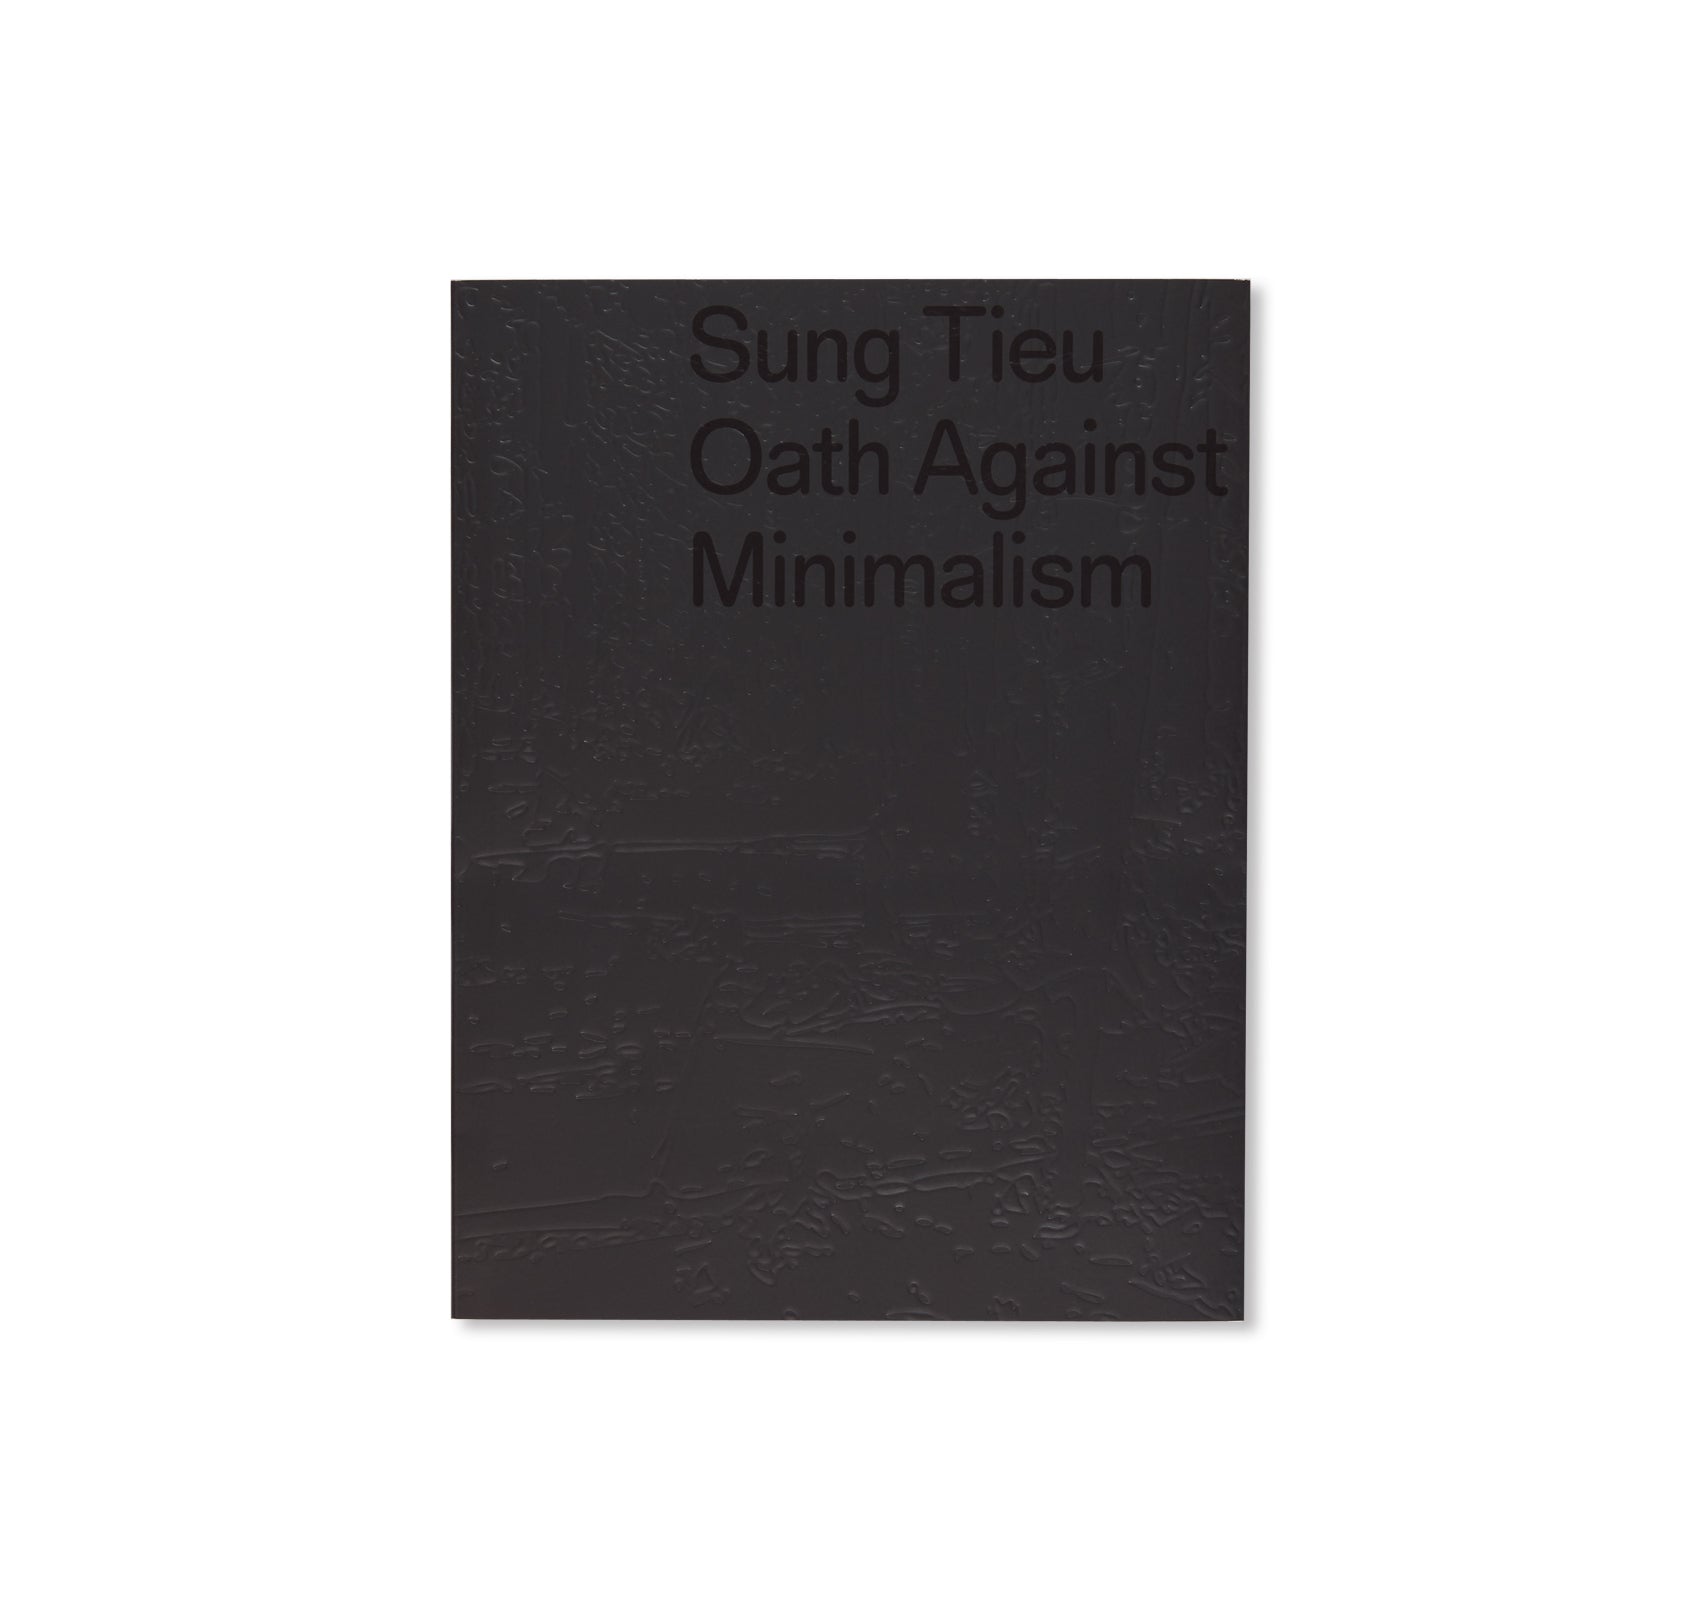 OATH AGAINST MINIMALISM by Sung Tieu